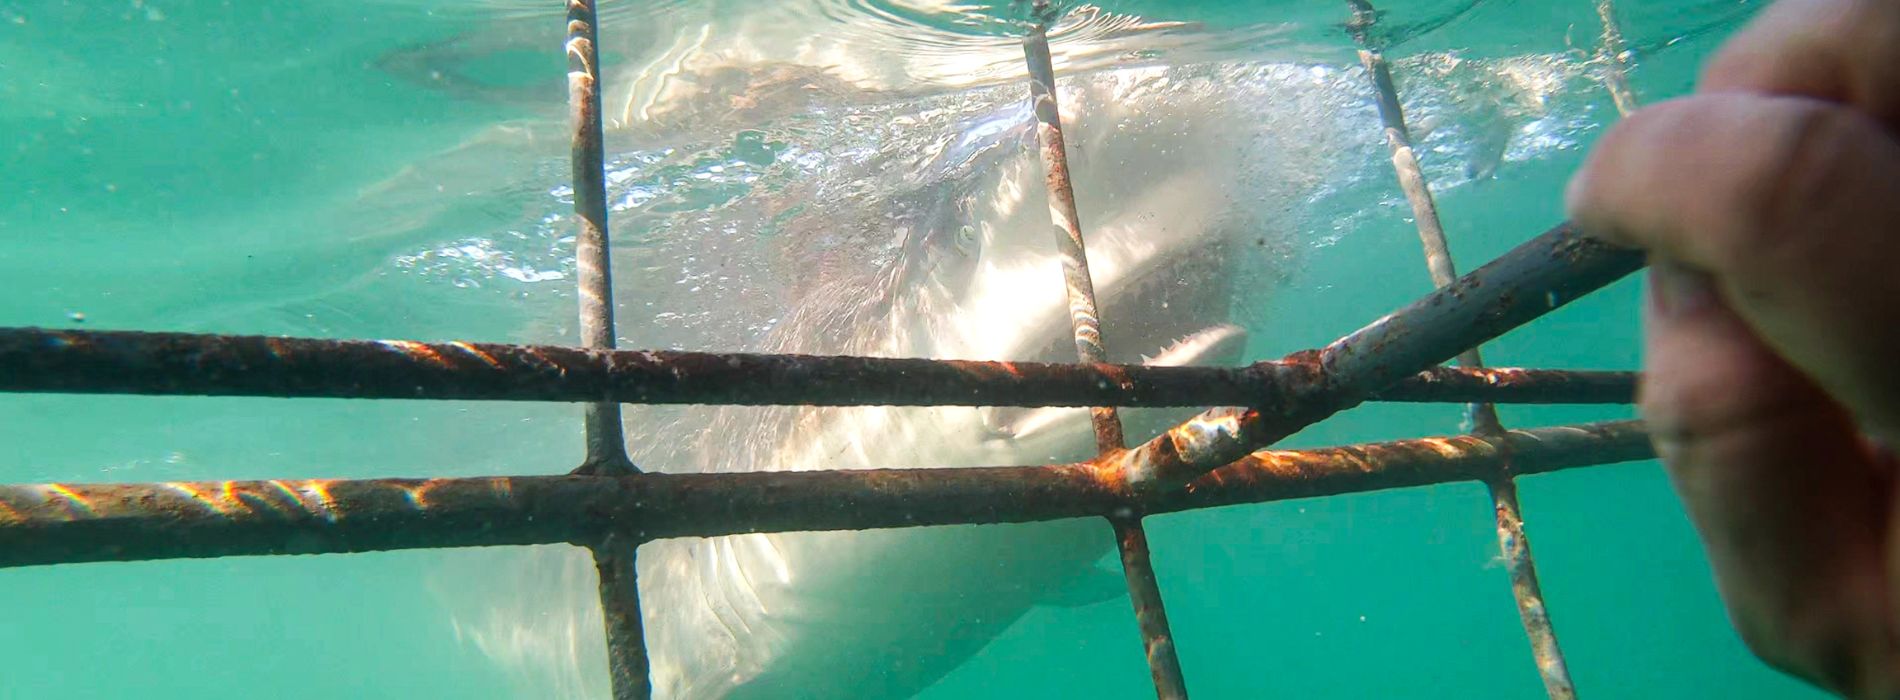 Shark cage diving waikiki - Madeinsea©